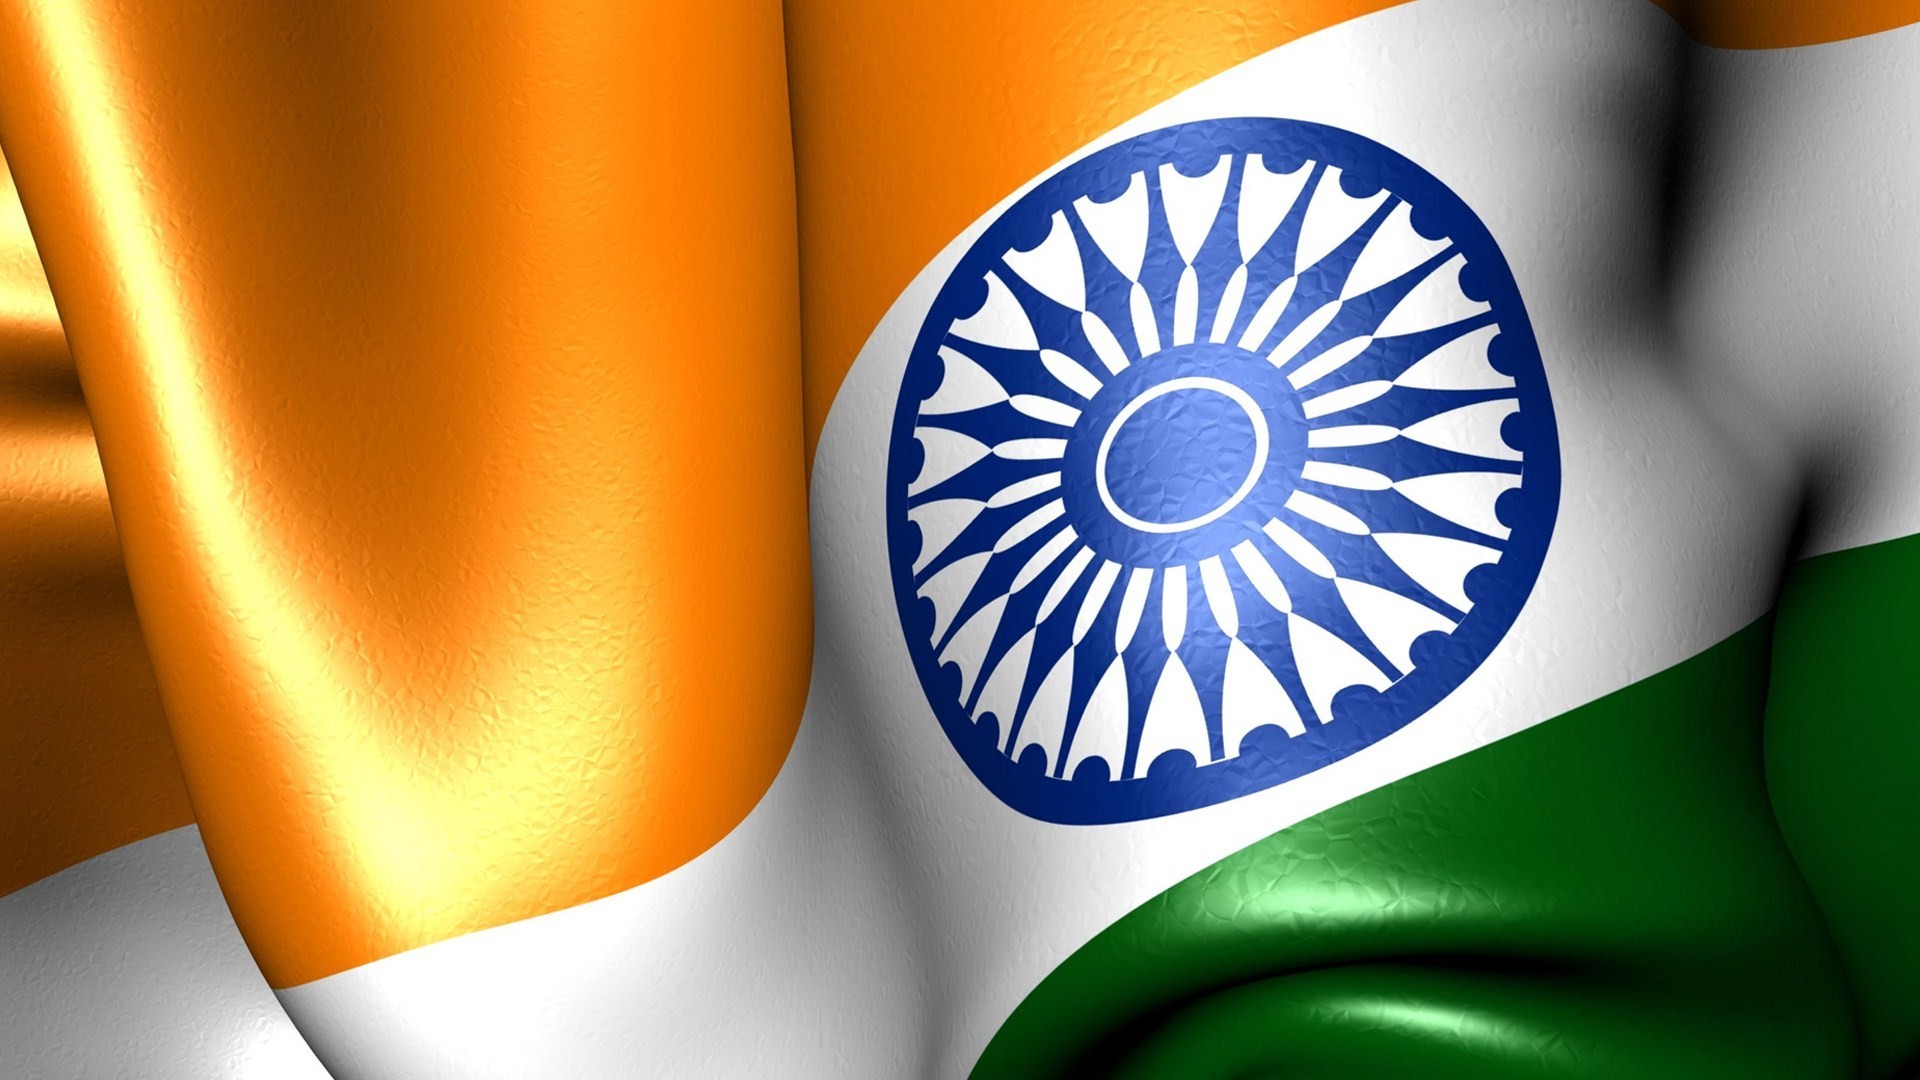 1920x1080 Best 20+ Indian flag photos ideas on Pinterest | Indian flag pictures,  Indian flag history and Cherokee org